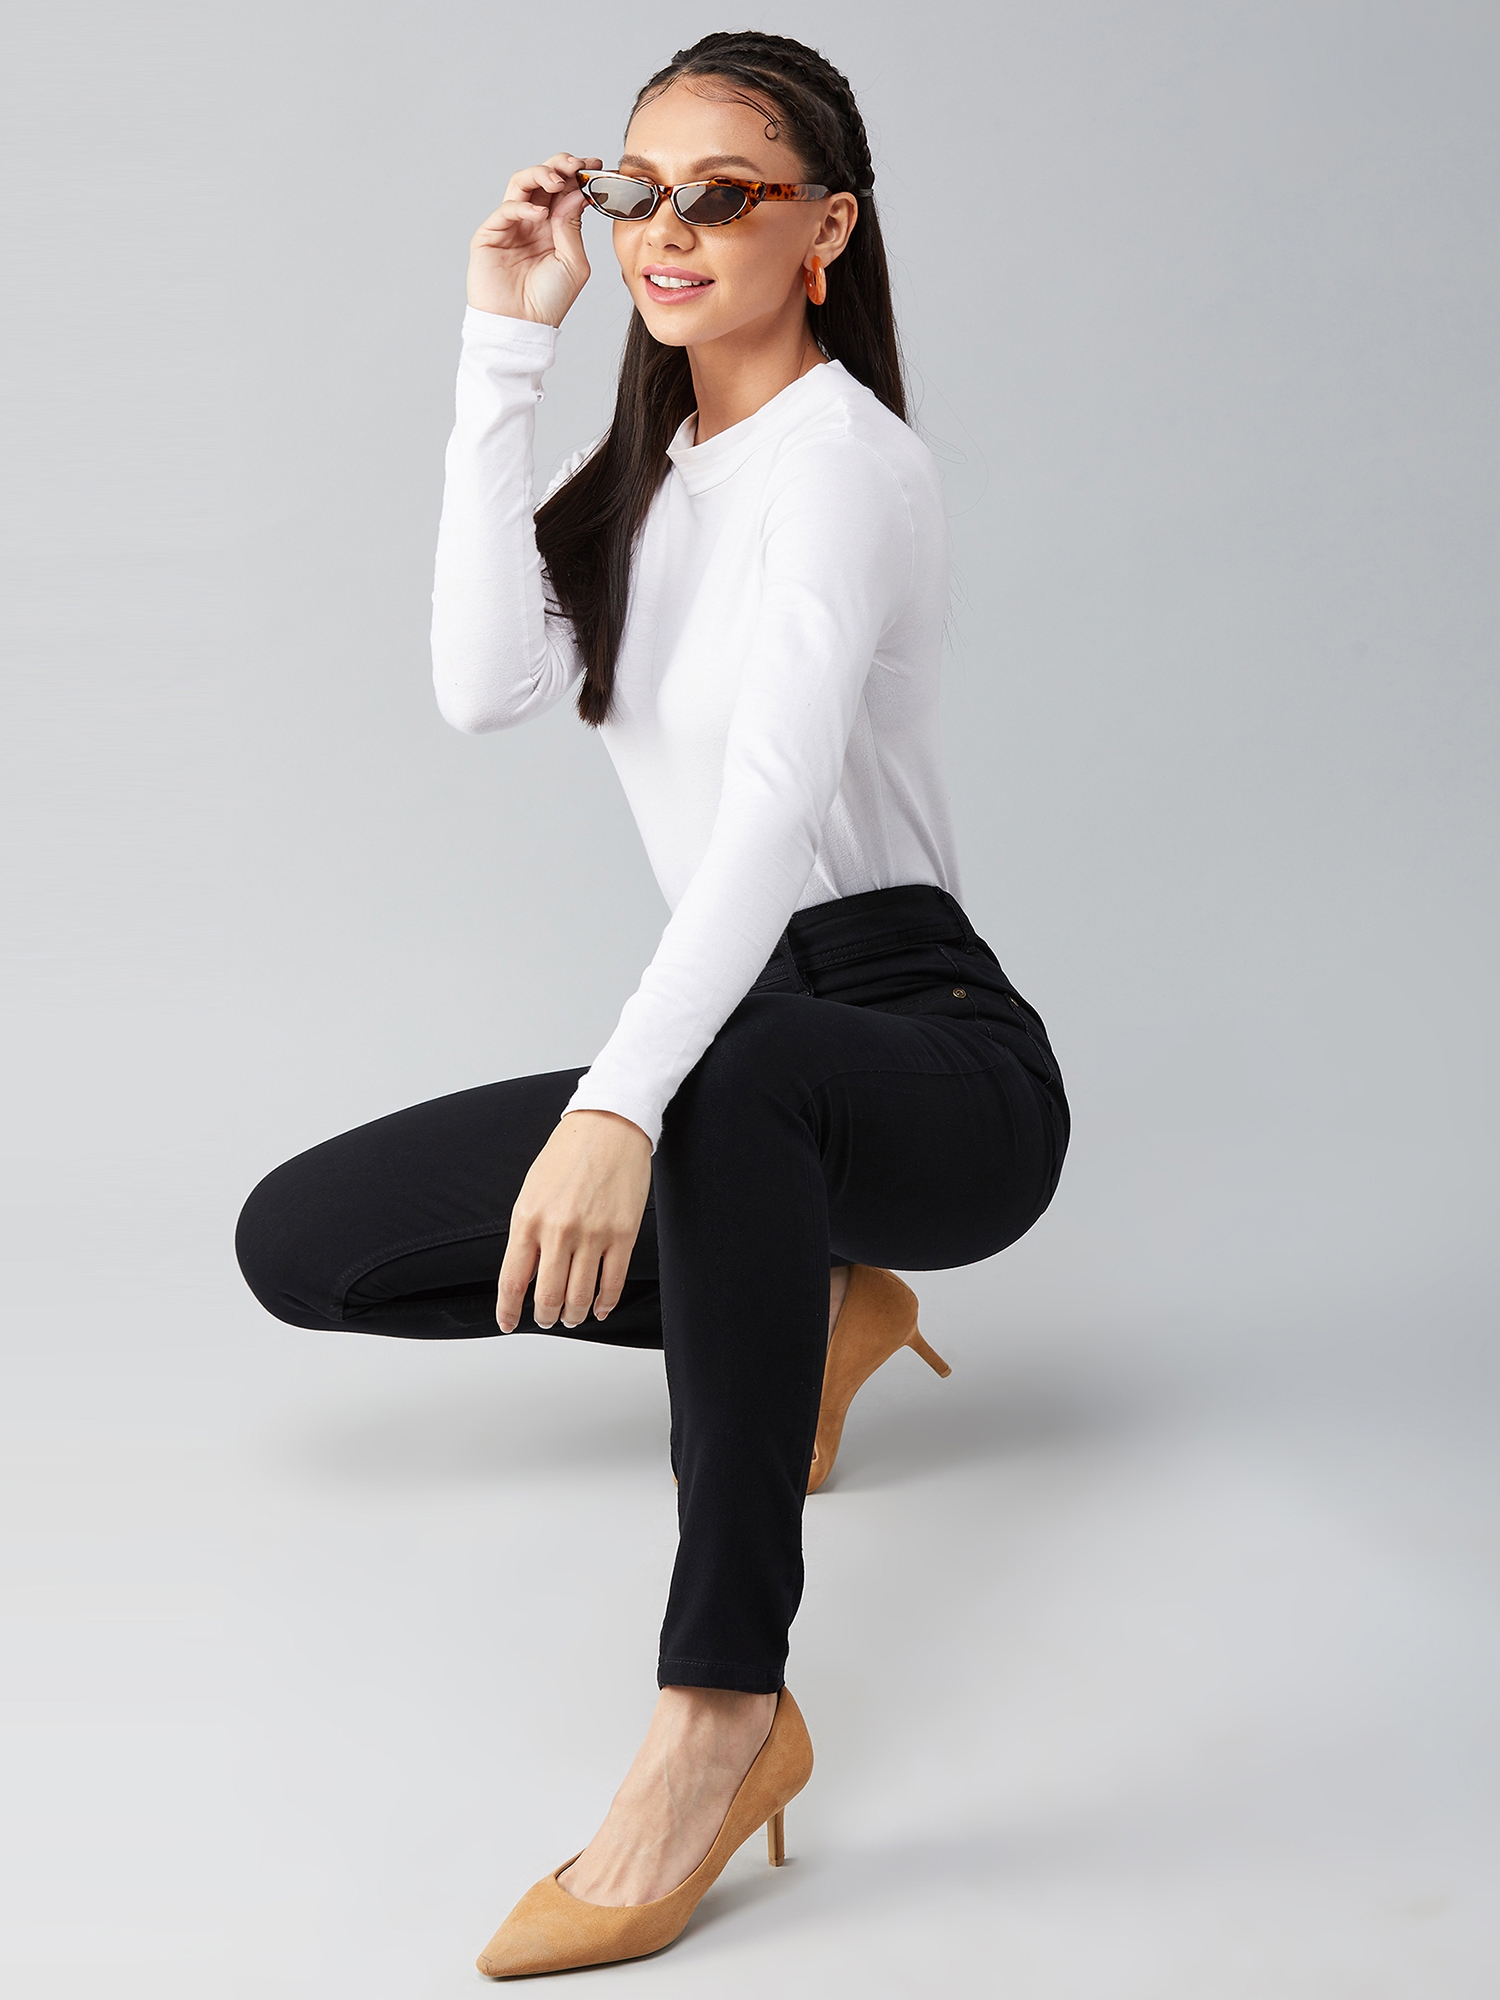 Women's Black Slim Fit High Rise Clean Look Acid Wash Regular Length Stretchable Denim Jeans